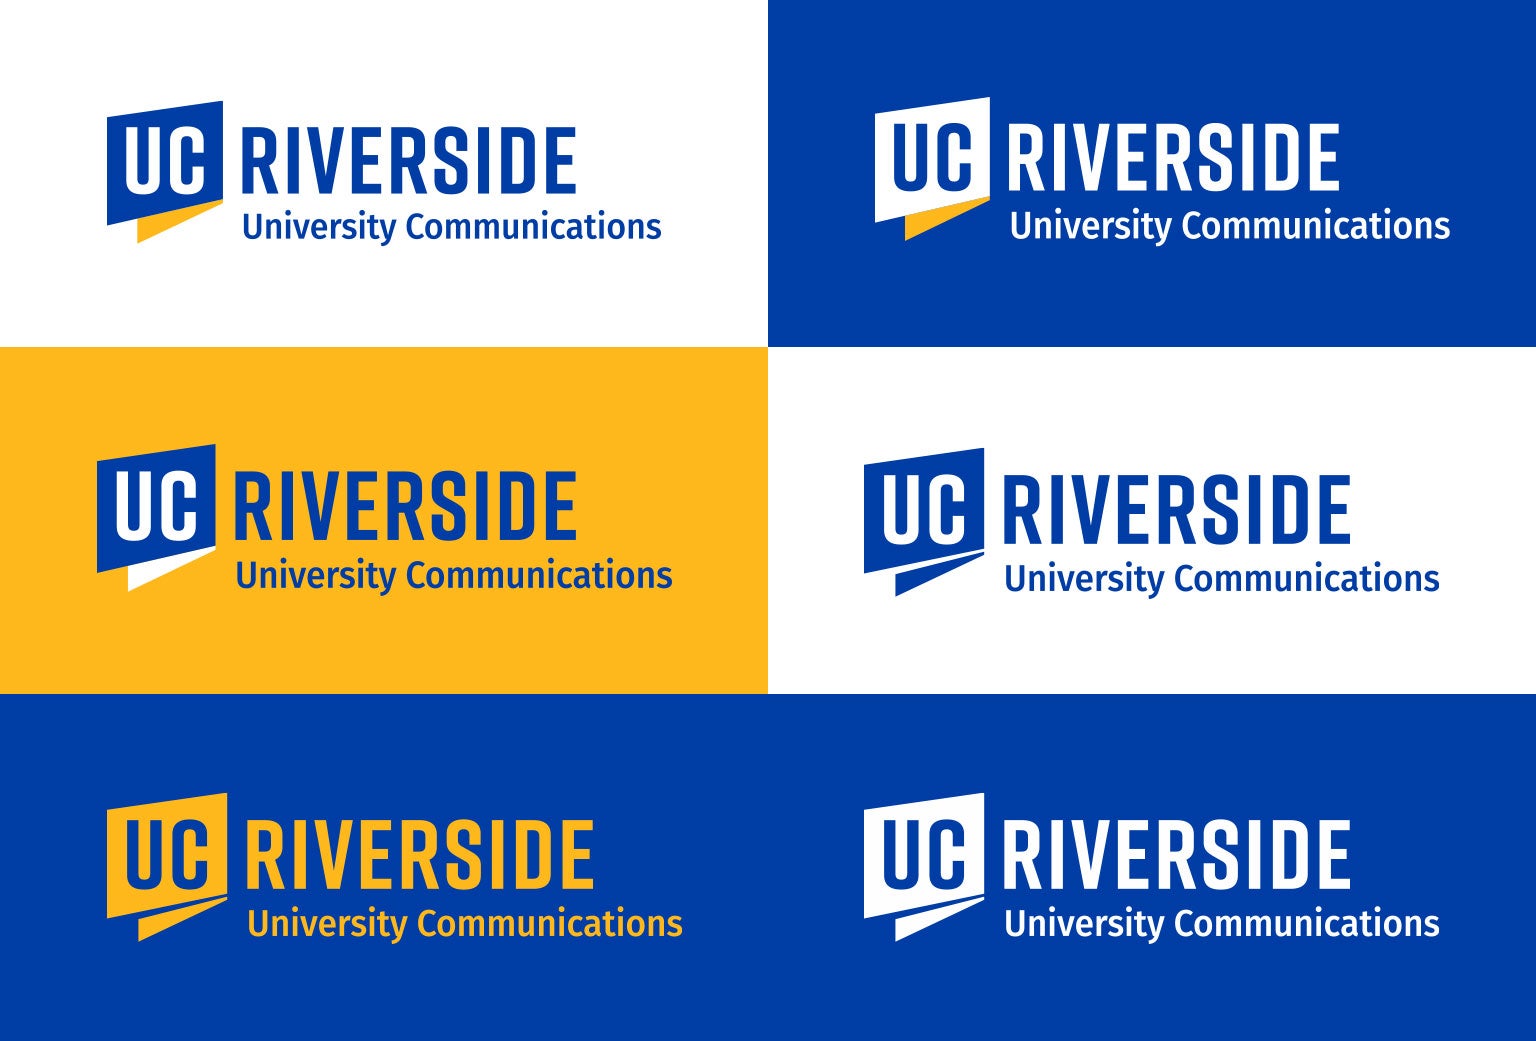 Department logo color options